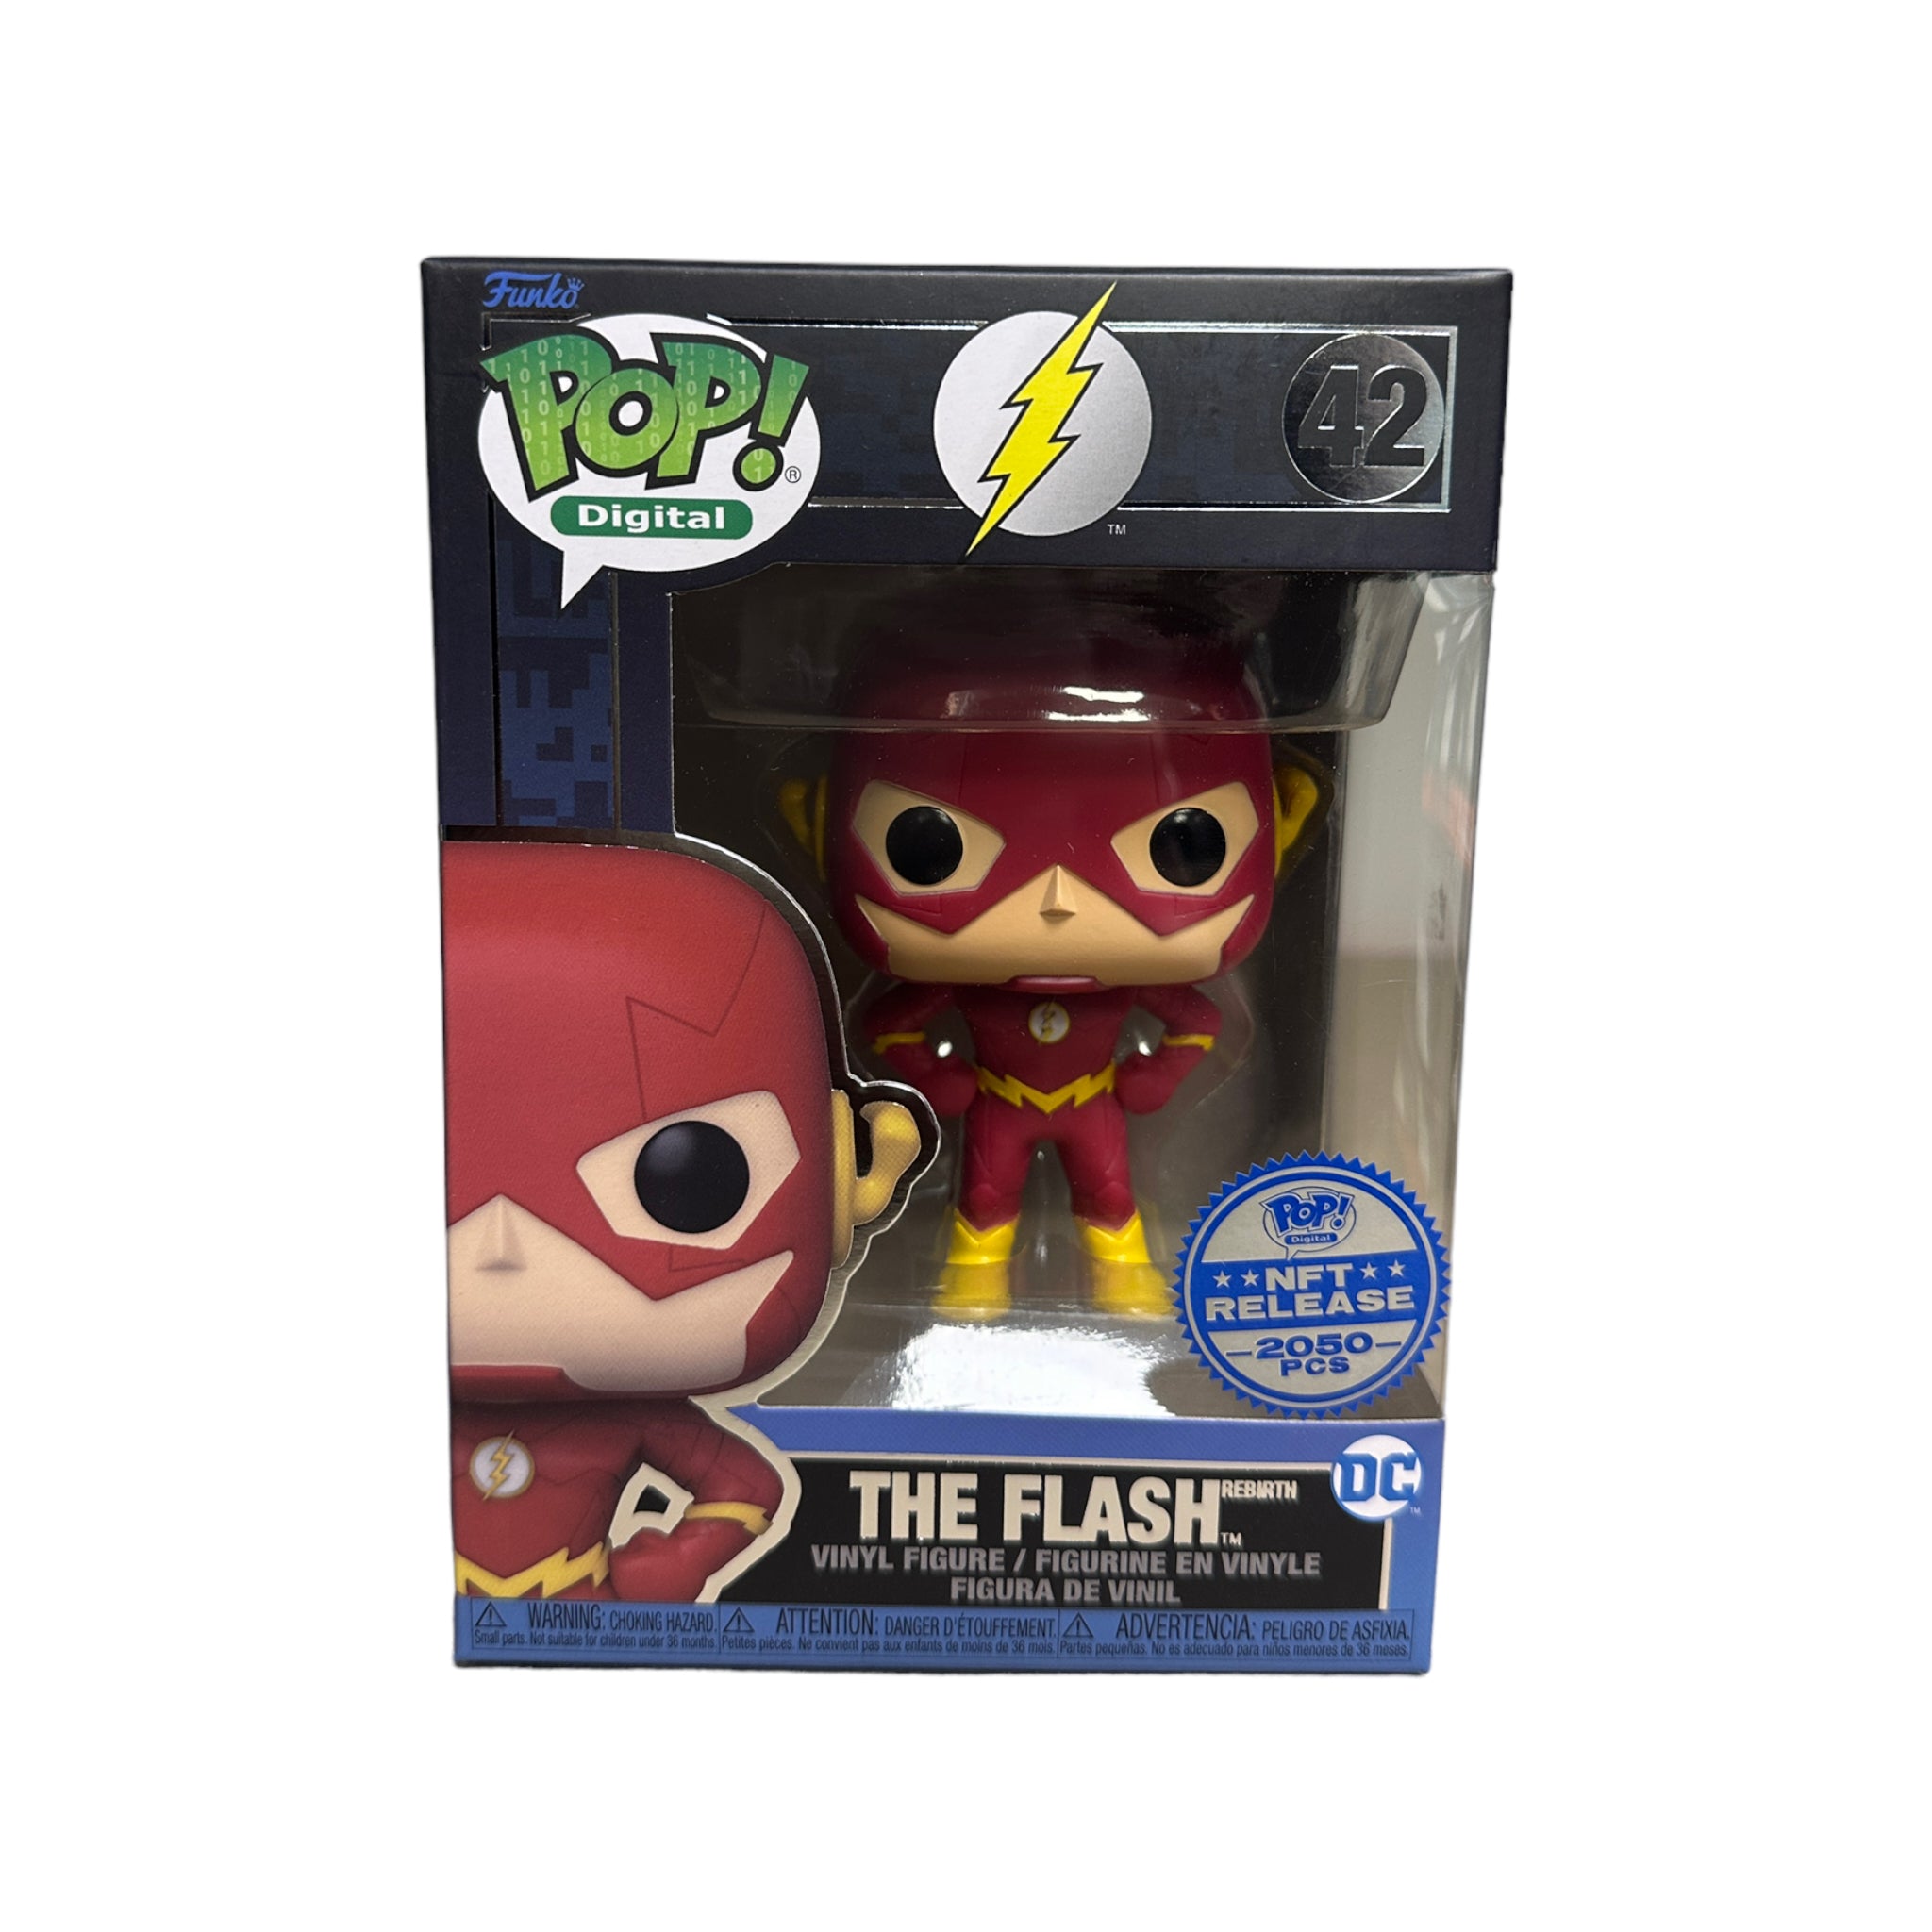 The Flash Rebirth #42 Funko Pop! - DC - NFT Release Exclusive LE2050 Pcs - Condition 9/10